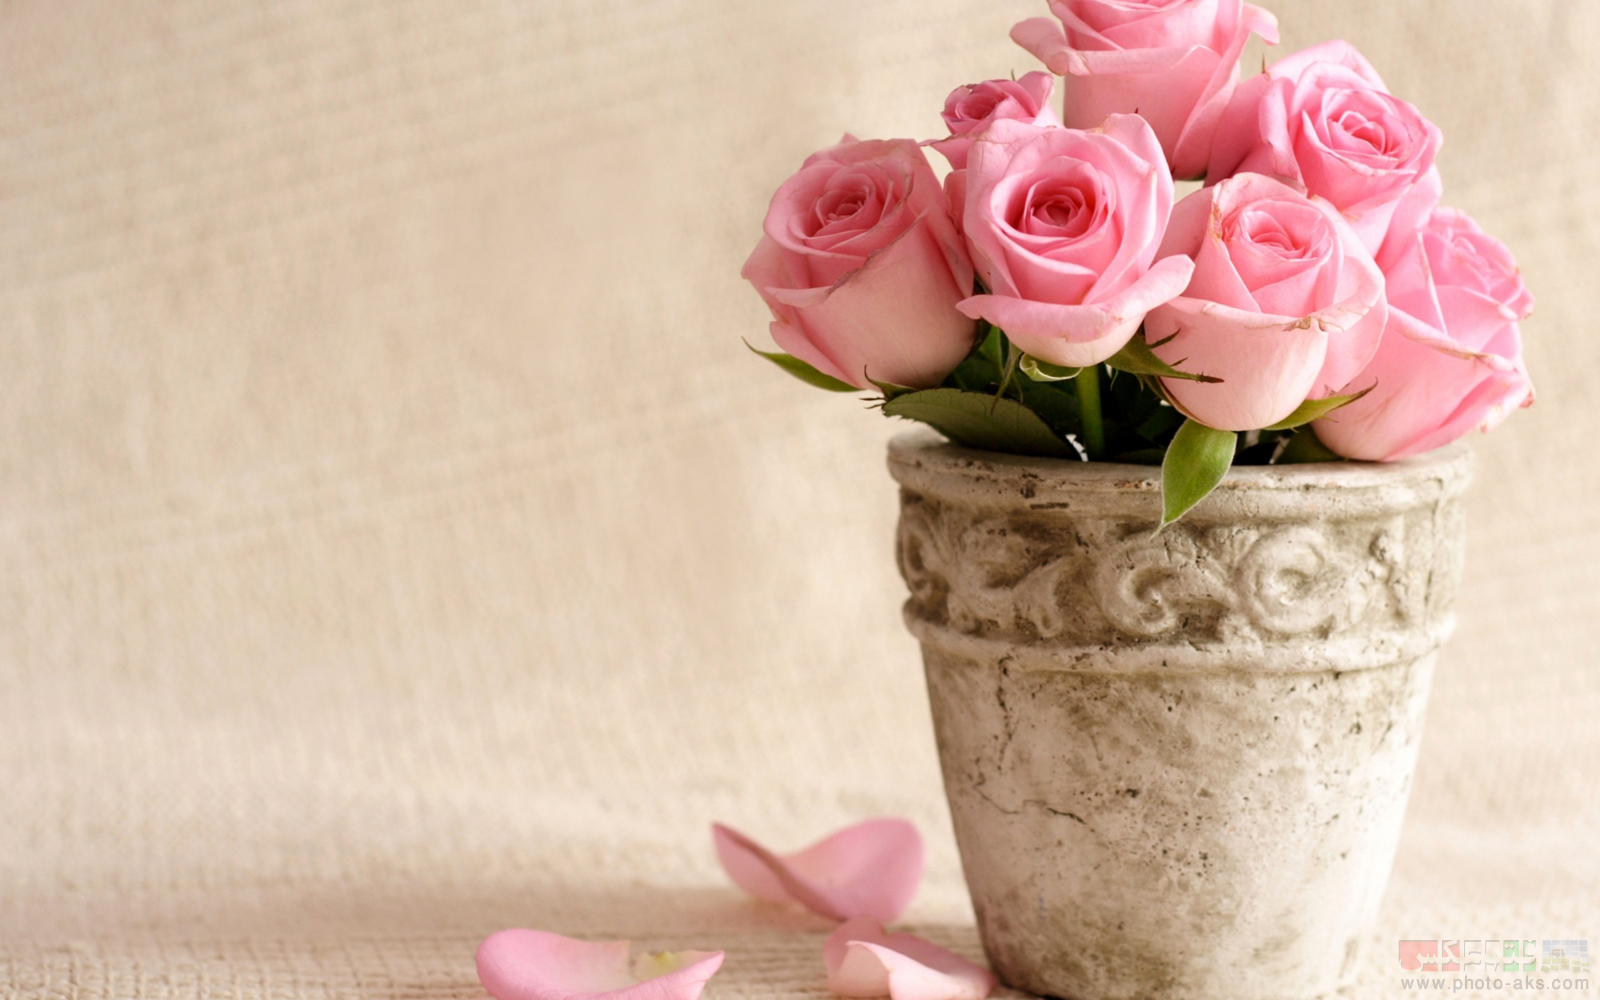 http://pic.photo-aks.com/photo/nature/flowers/rose/large/pink_rose_on_pot.jpg